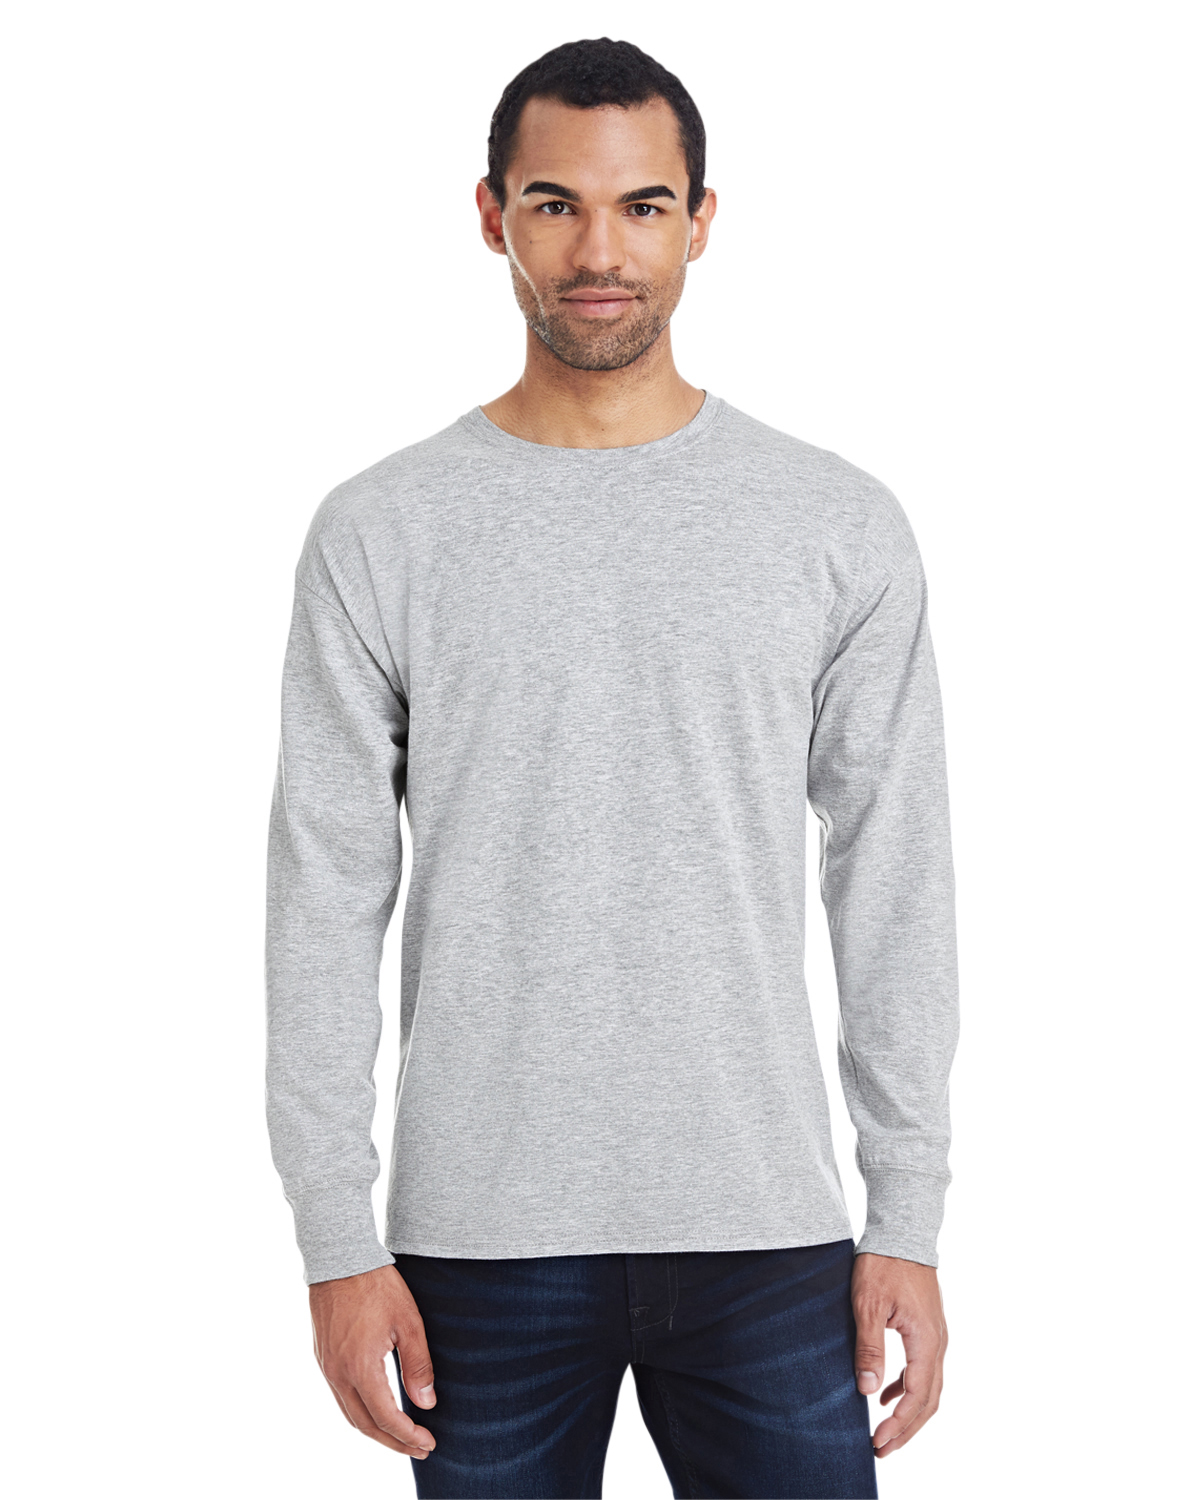 Hanes 42L0 Men's 4.5 oz., 60/40 Ringspun Cotton/Polyester X-Temp®  Long-Sleeve T-Shirt–Light Steel (S)